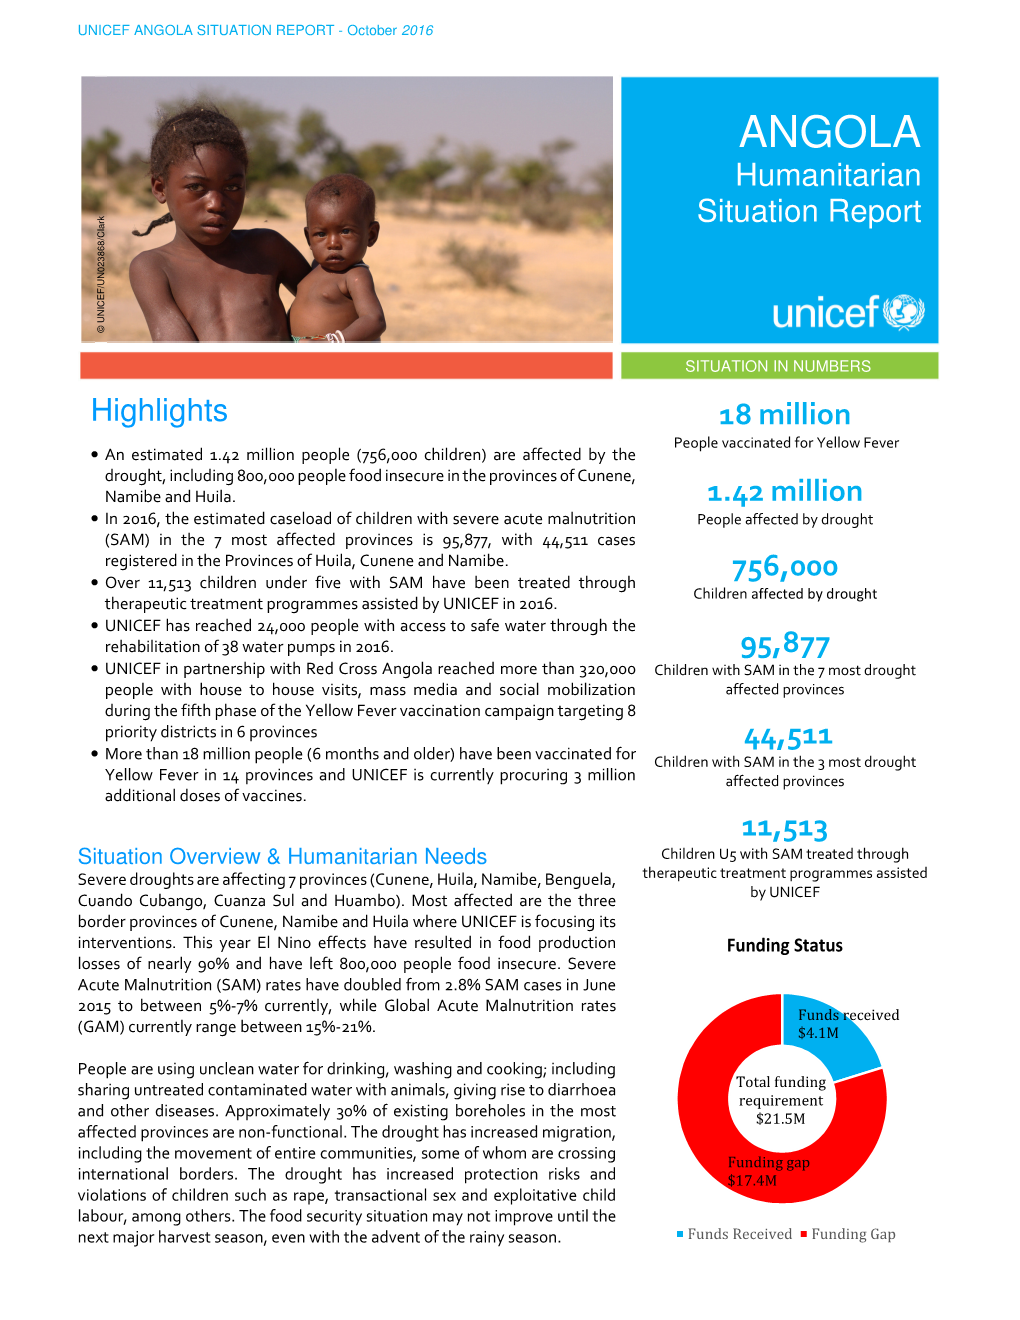 UNICEF Angola Humanitarian Situation Report